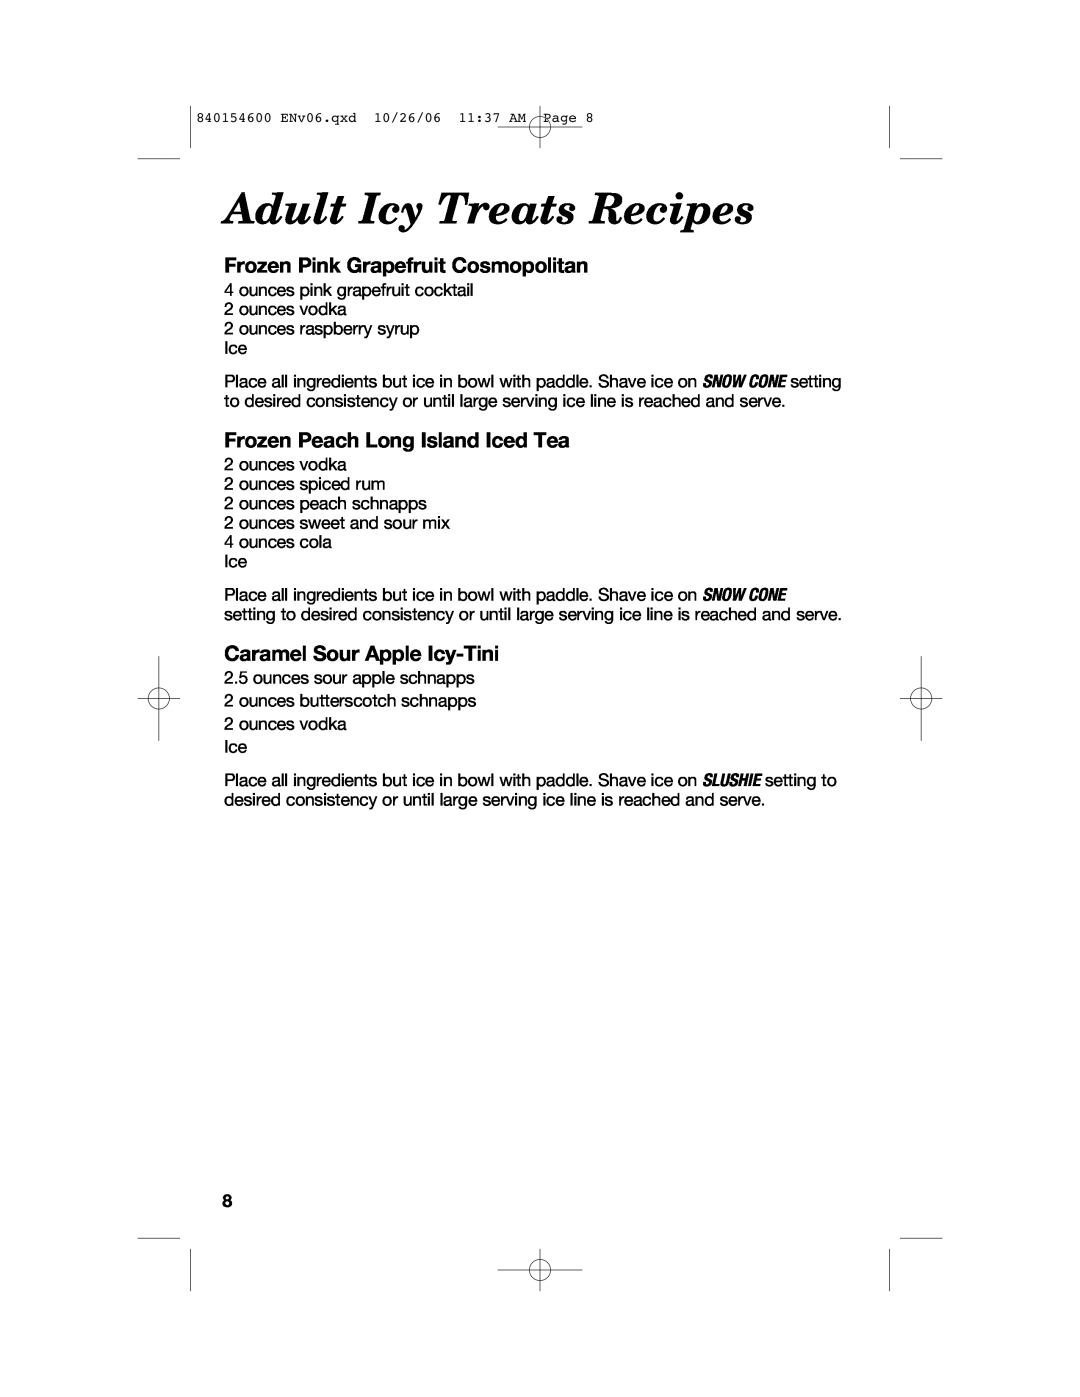 Hamilton Beach 840154600 Adult Icy Treats Recipes, Frozen Pink Grapefruit Cosmopolitan, Frozen Peach Long Island Iced Tea 